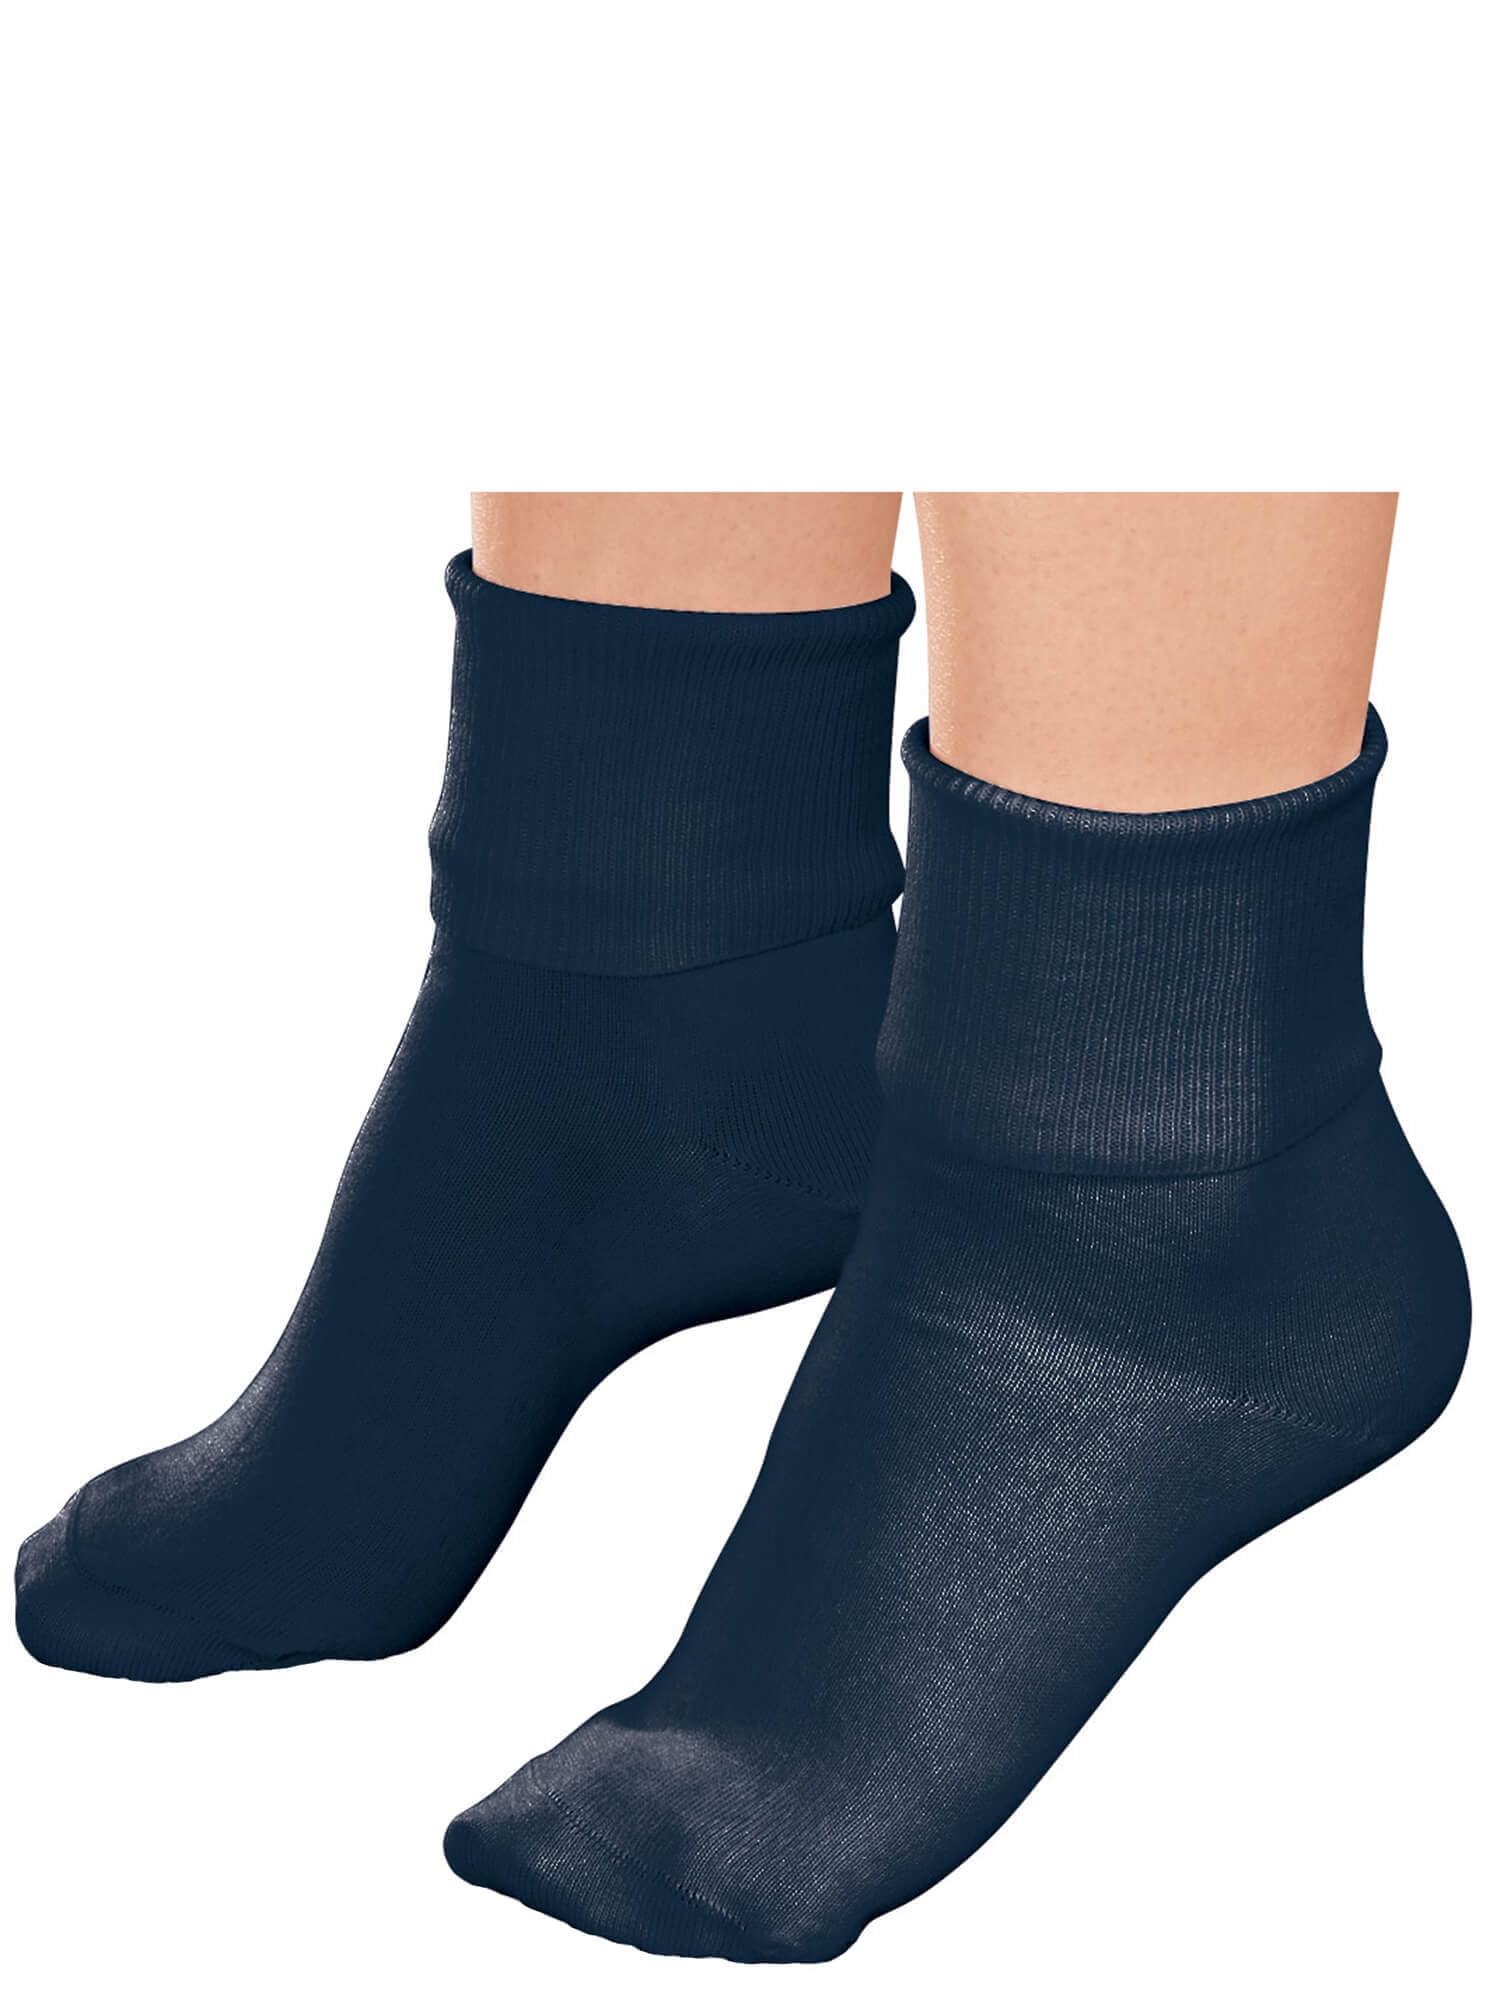 Buster Brown Women's Socks, 3-Pack, 100% Cotton Bobby Sock, 3 Pairs Black,  Medium, Fits Shoe Size 7.5-9 